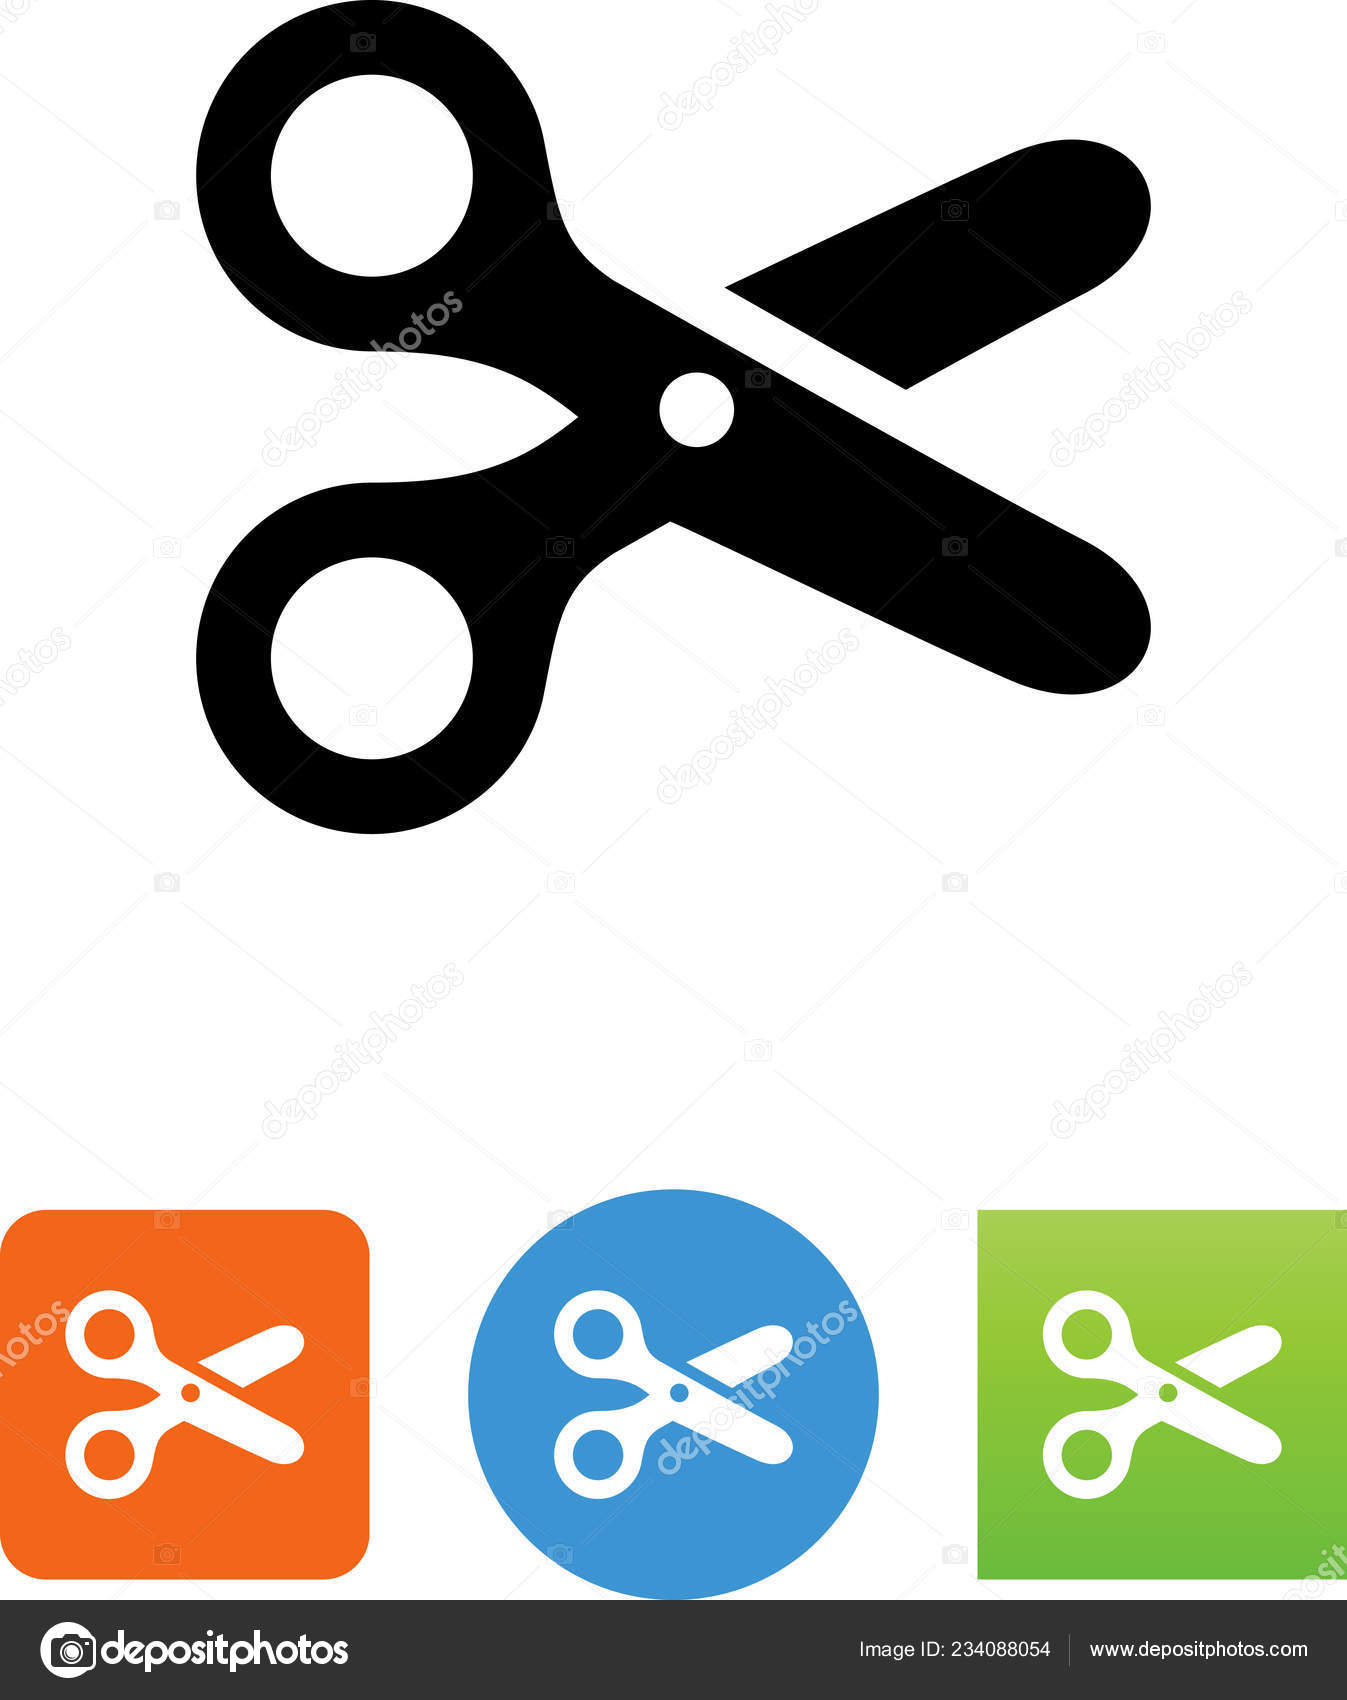 https://st4.depositphotos.com/21492660/23408/v/1600/depositphotos_234088054-stock-illustration-craft-scissors-vector-icon.jpg